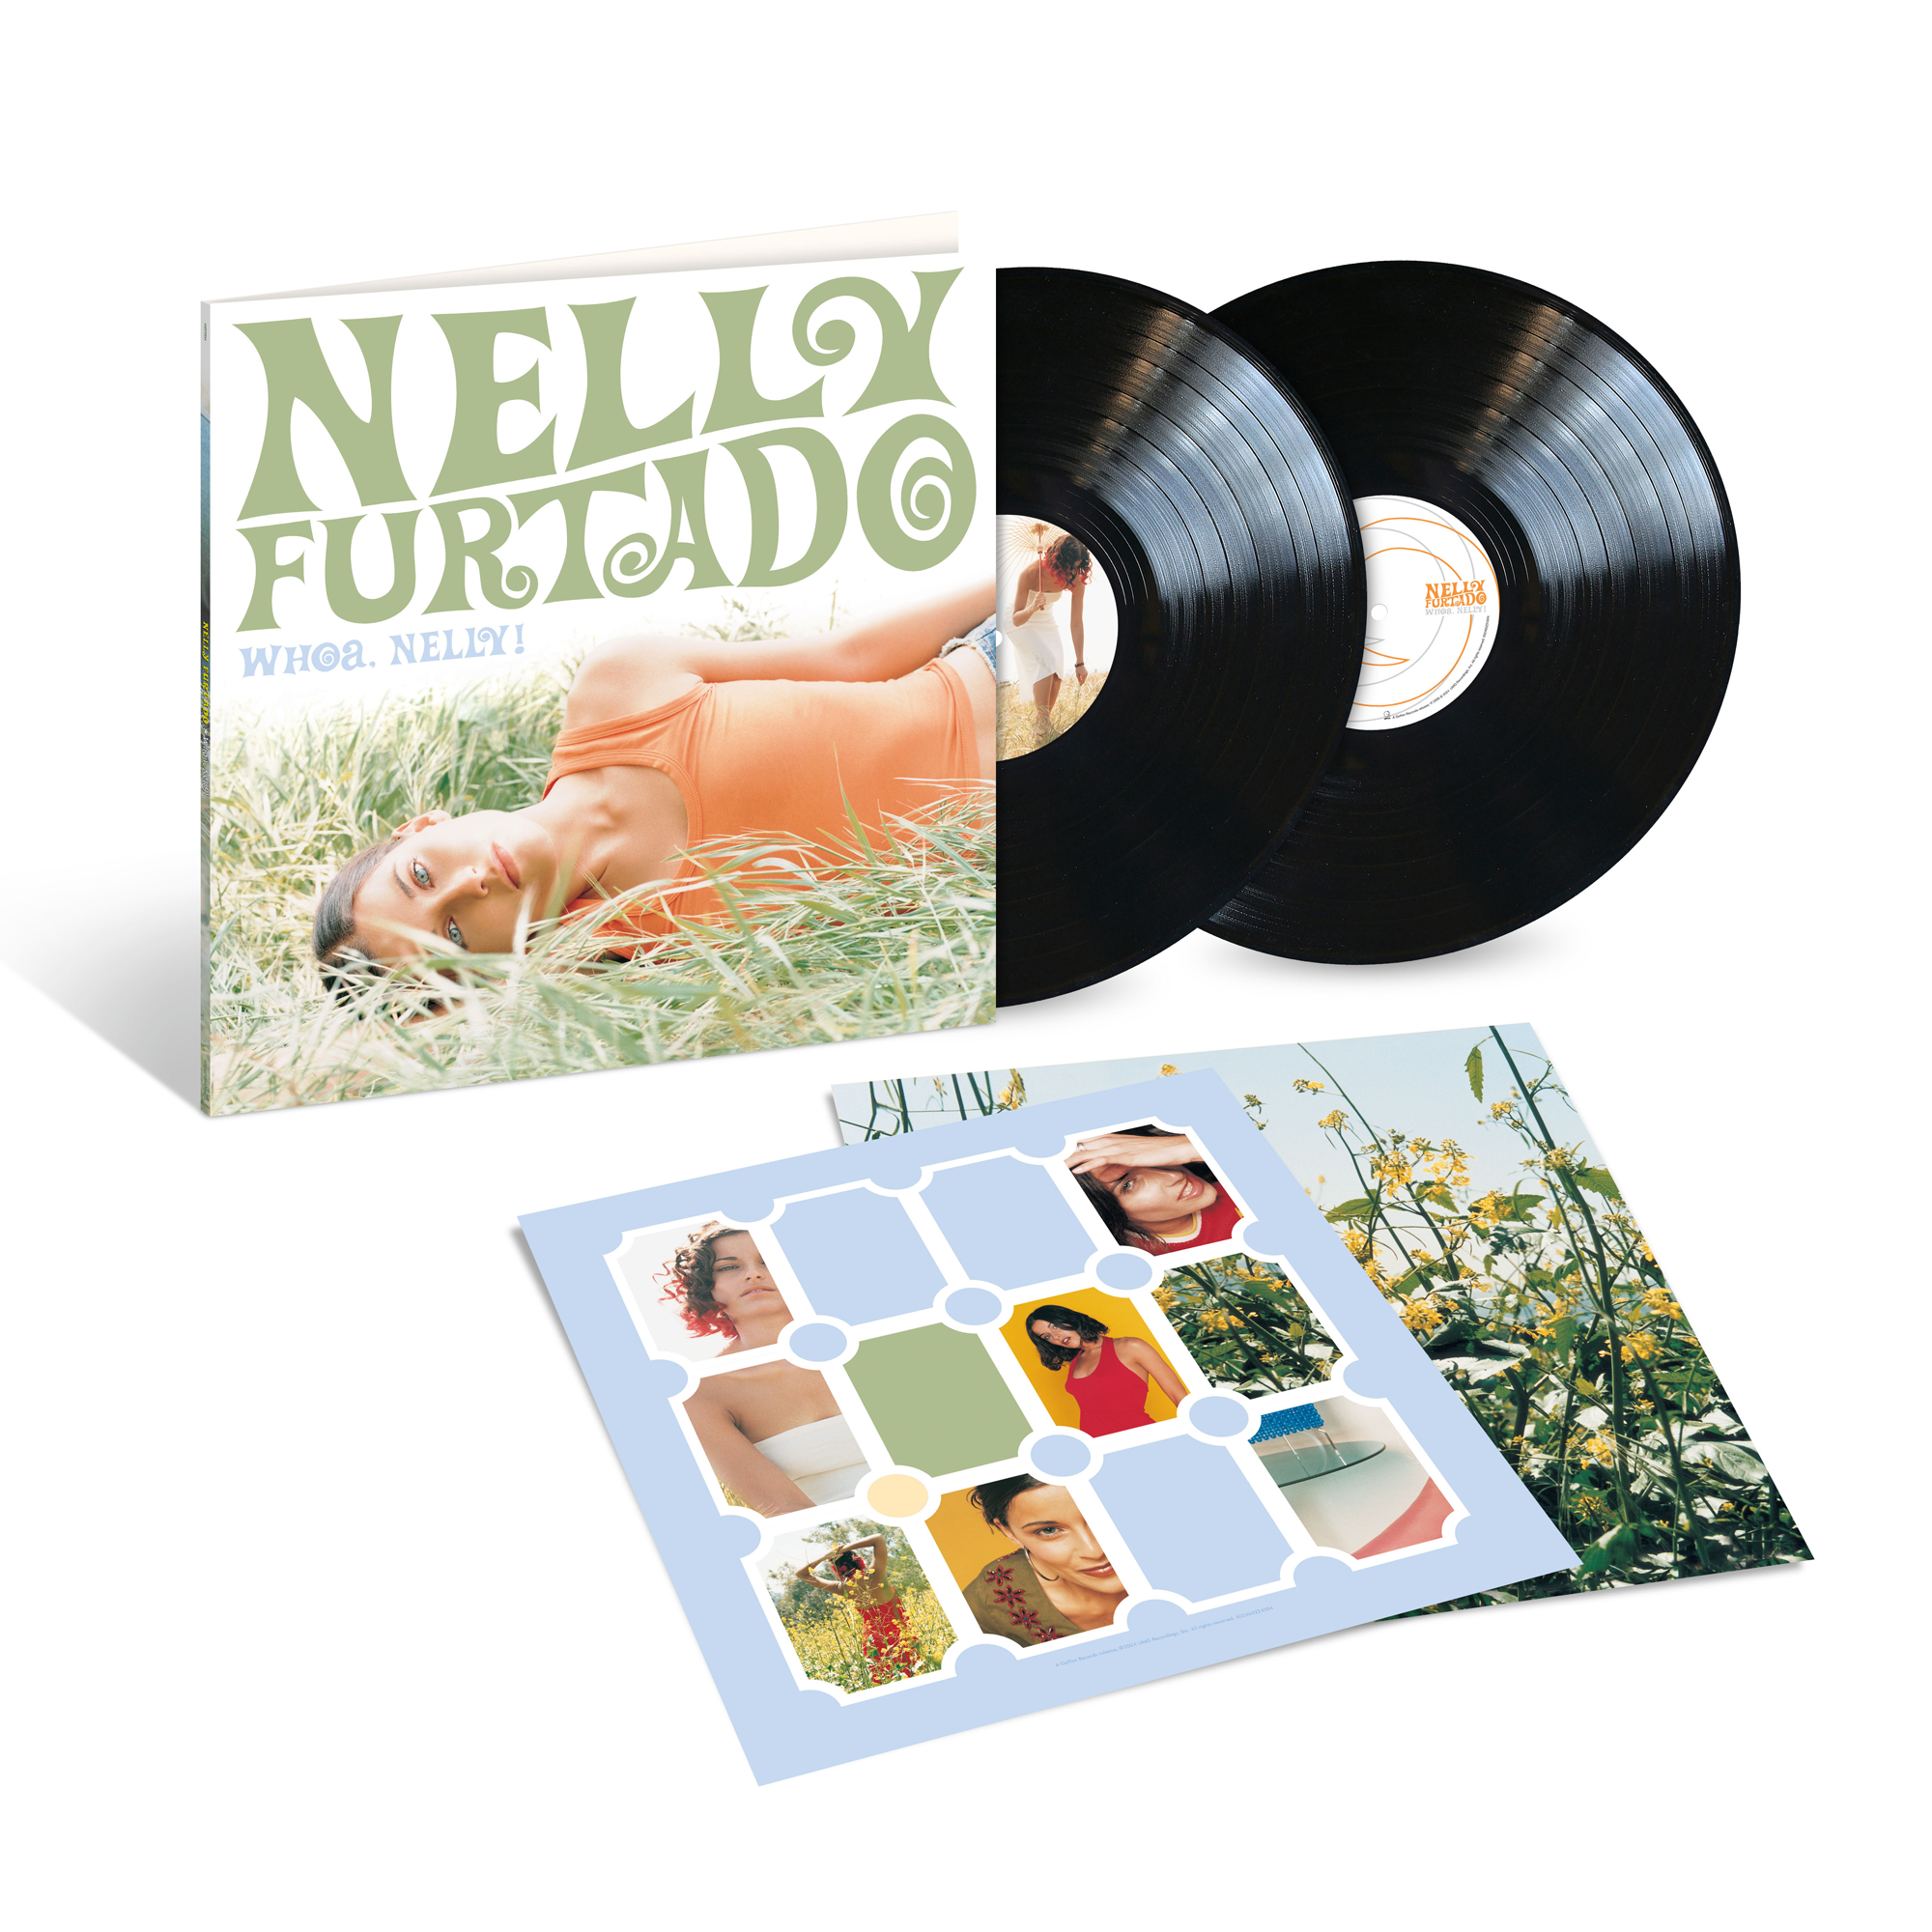 Nelly Furtado - Whoa, Nelly! Vinyl 2LP